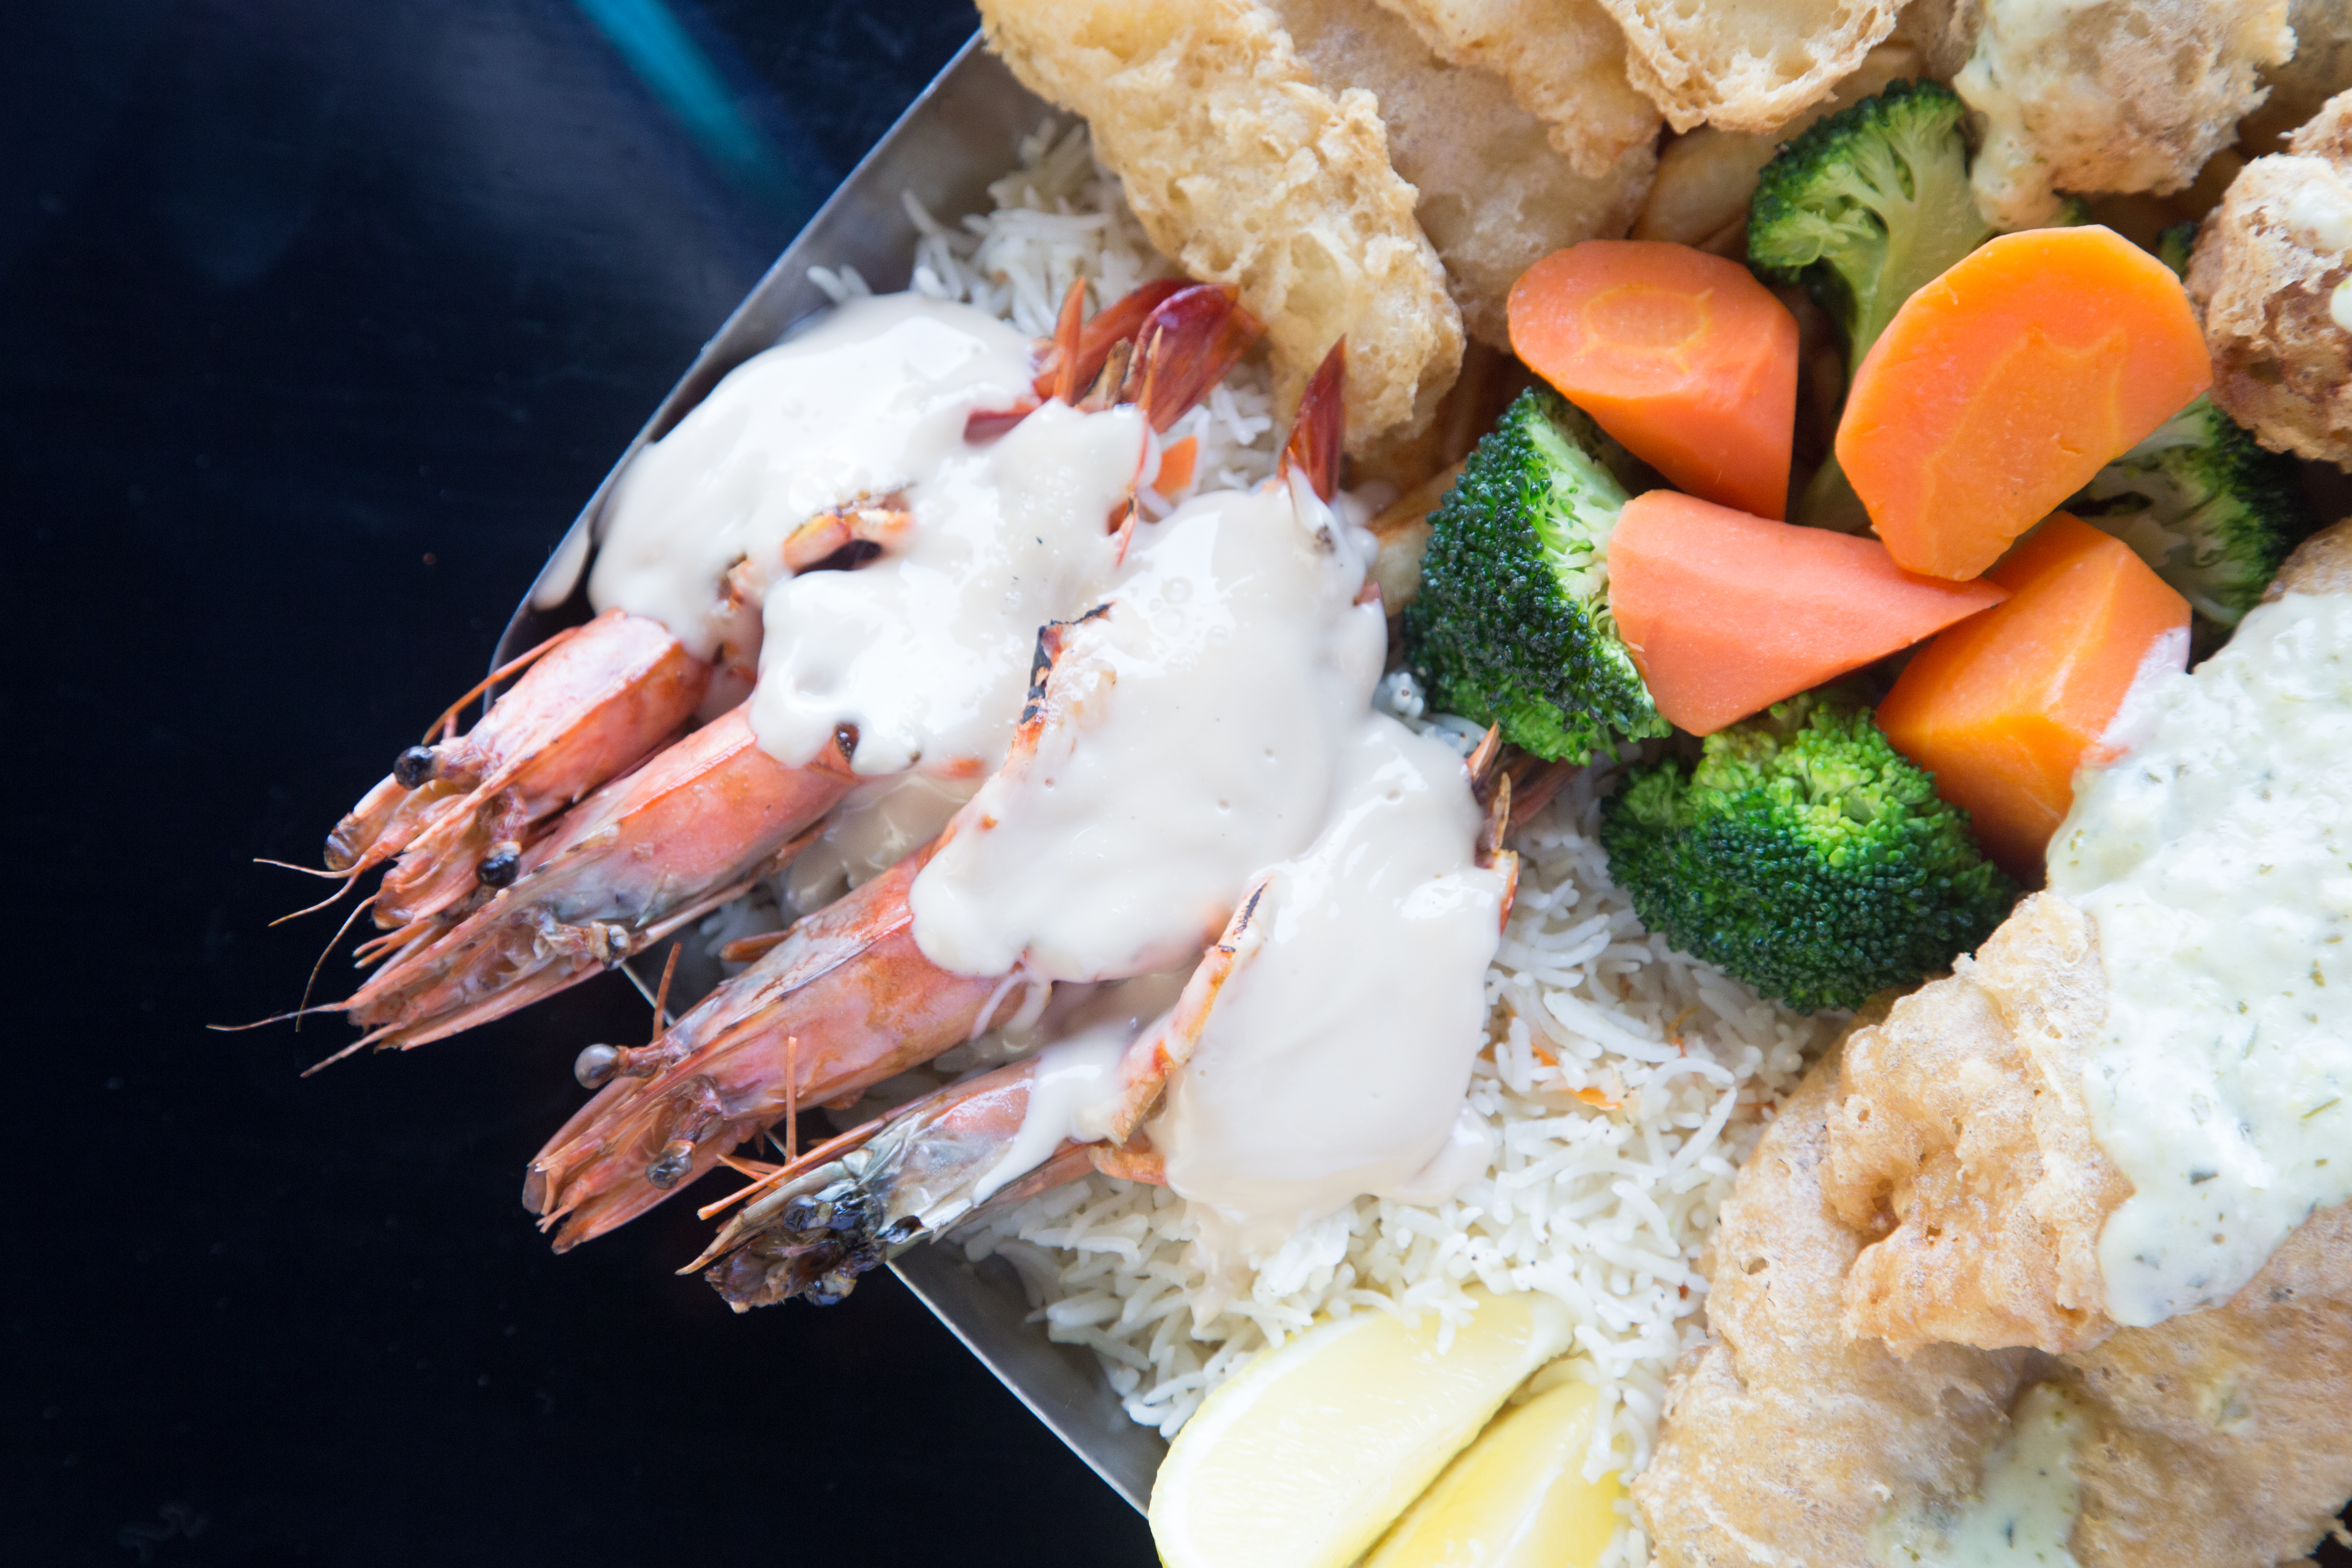 Oman dining: Celebrate seafood at the Manhattan Fish Market